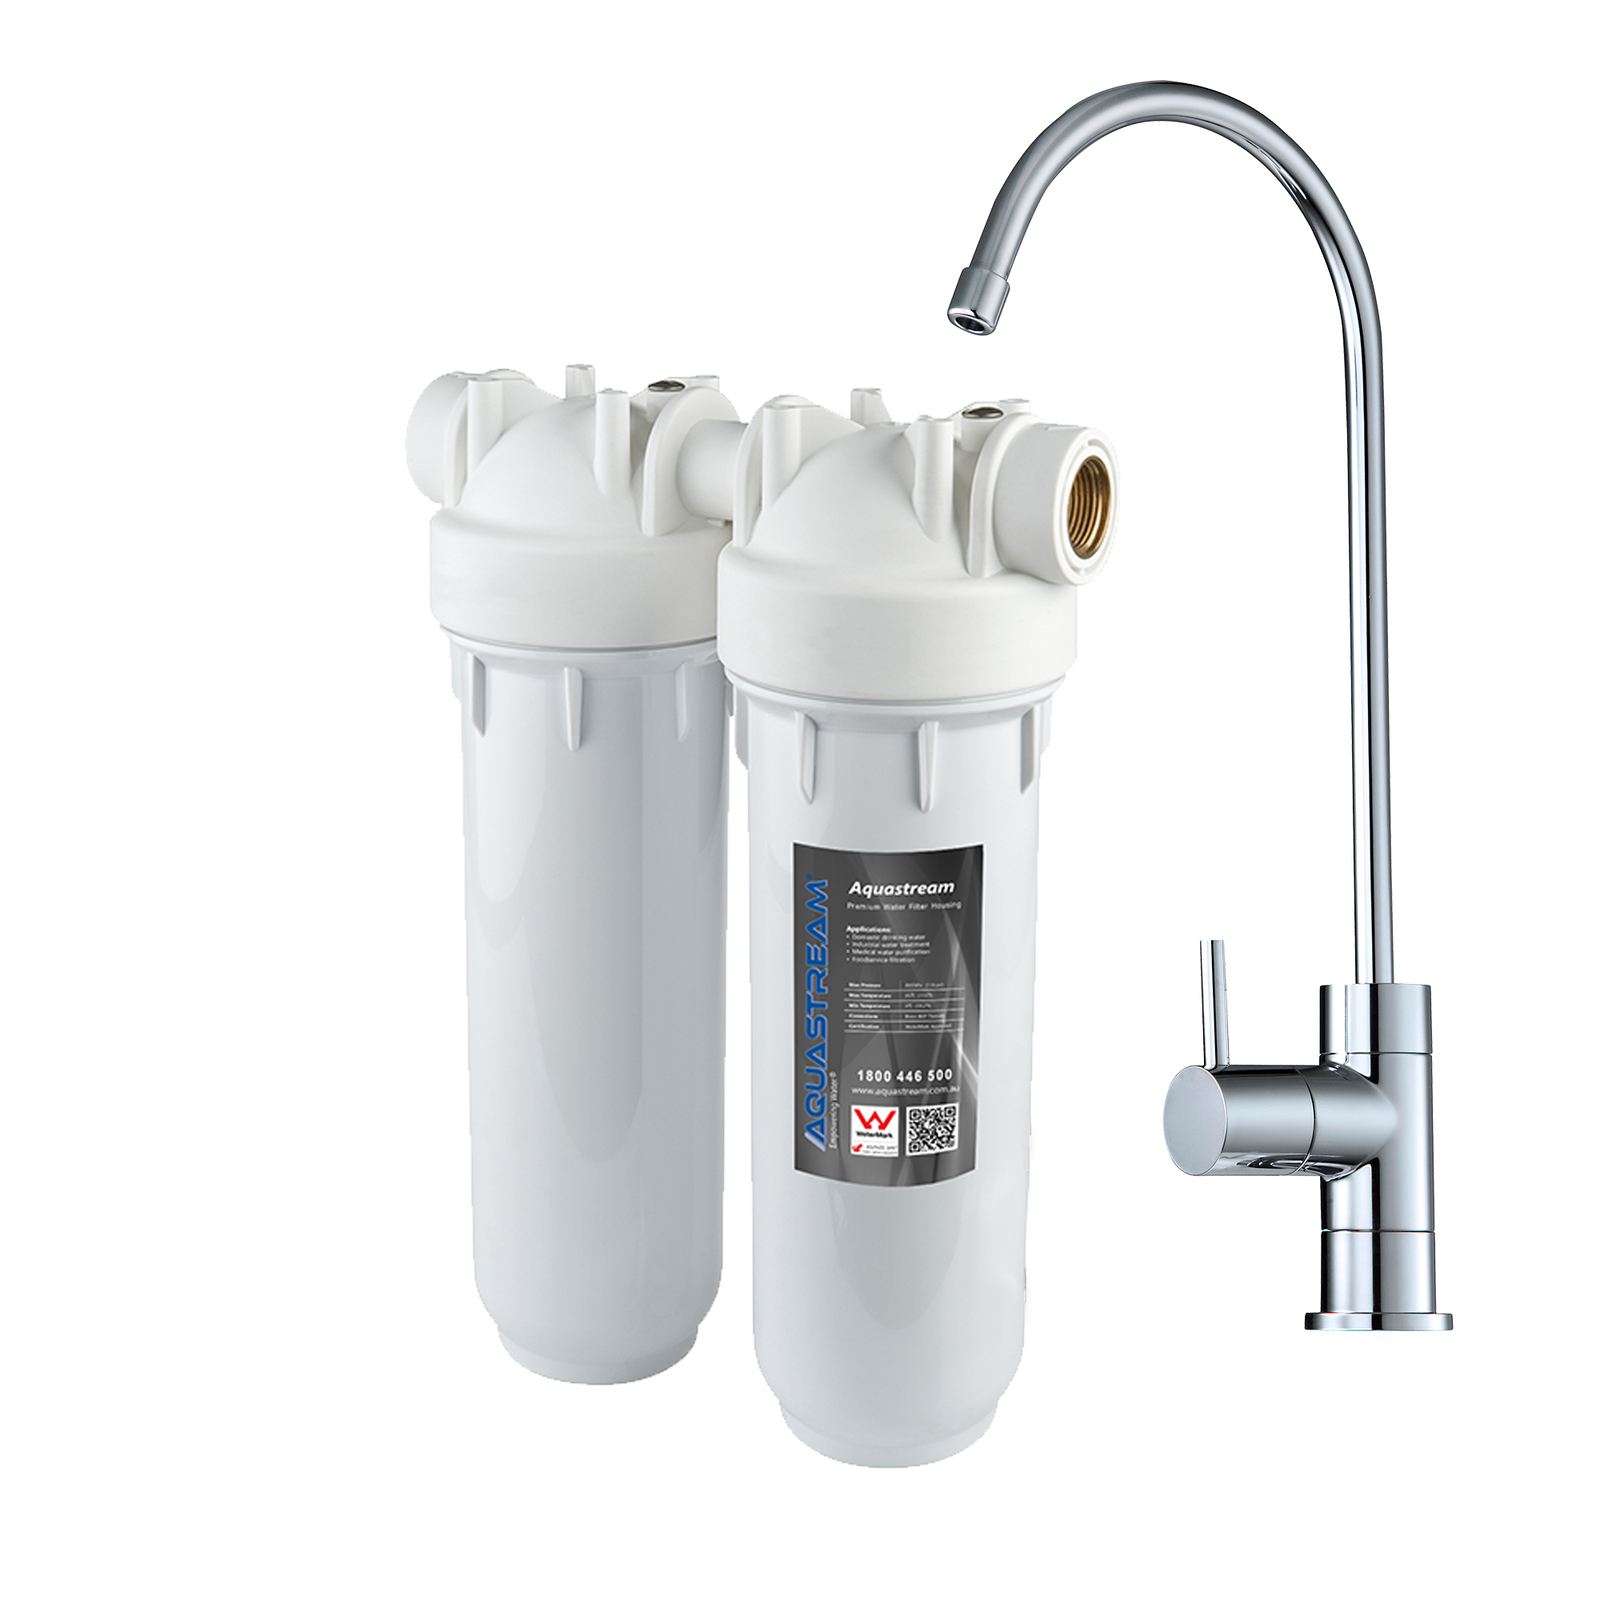 Aquastream Lead Reduction Under Sink Filter System